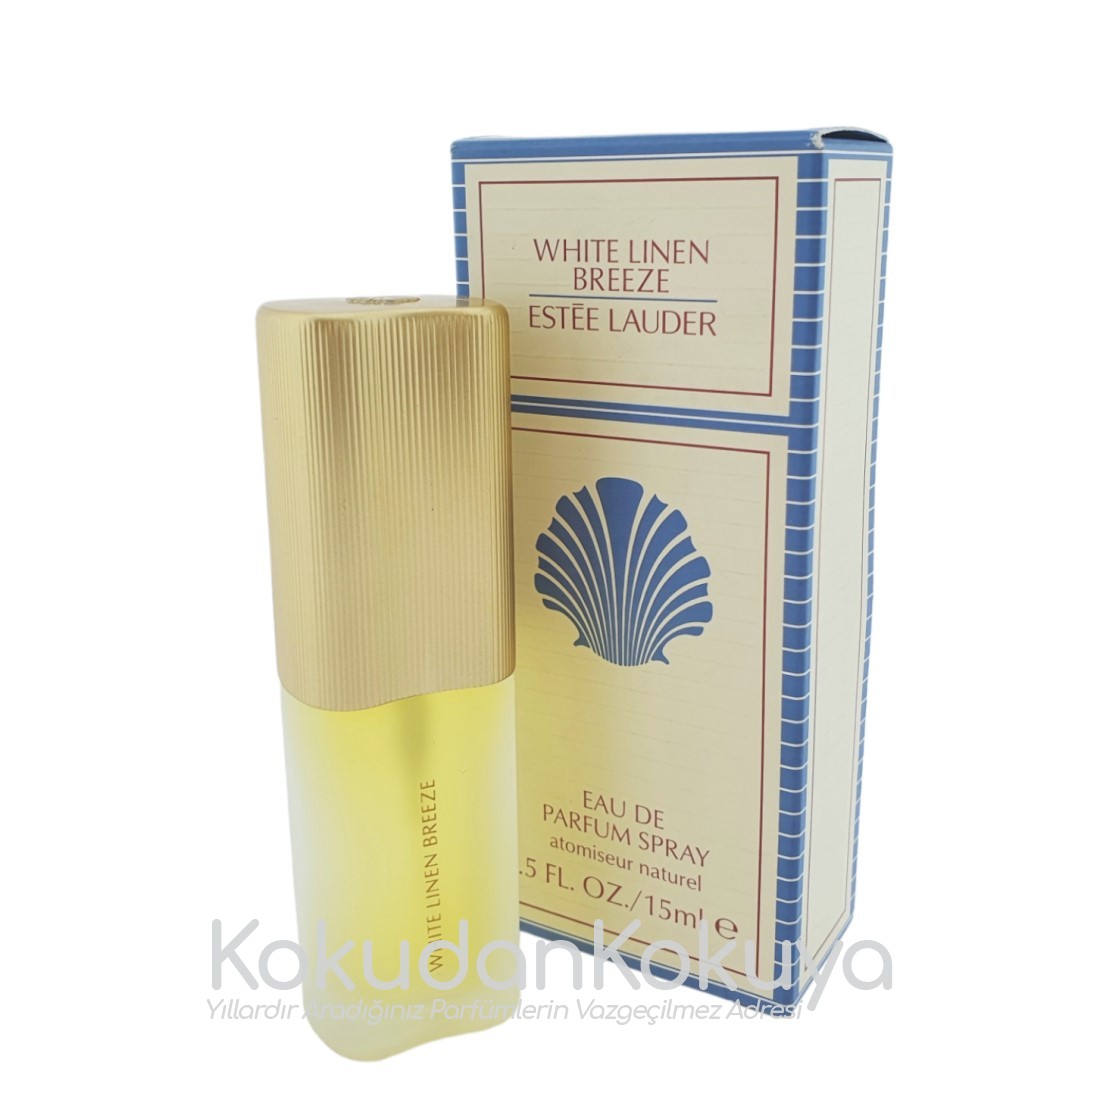 ESTEE LAUDER White Linen Breeze (Vintage) Parfüm Kadın 15ml Eau De Parfum (EDP) Sprey 